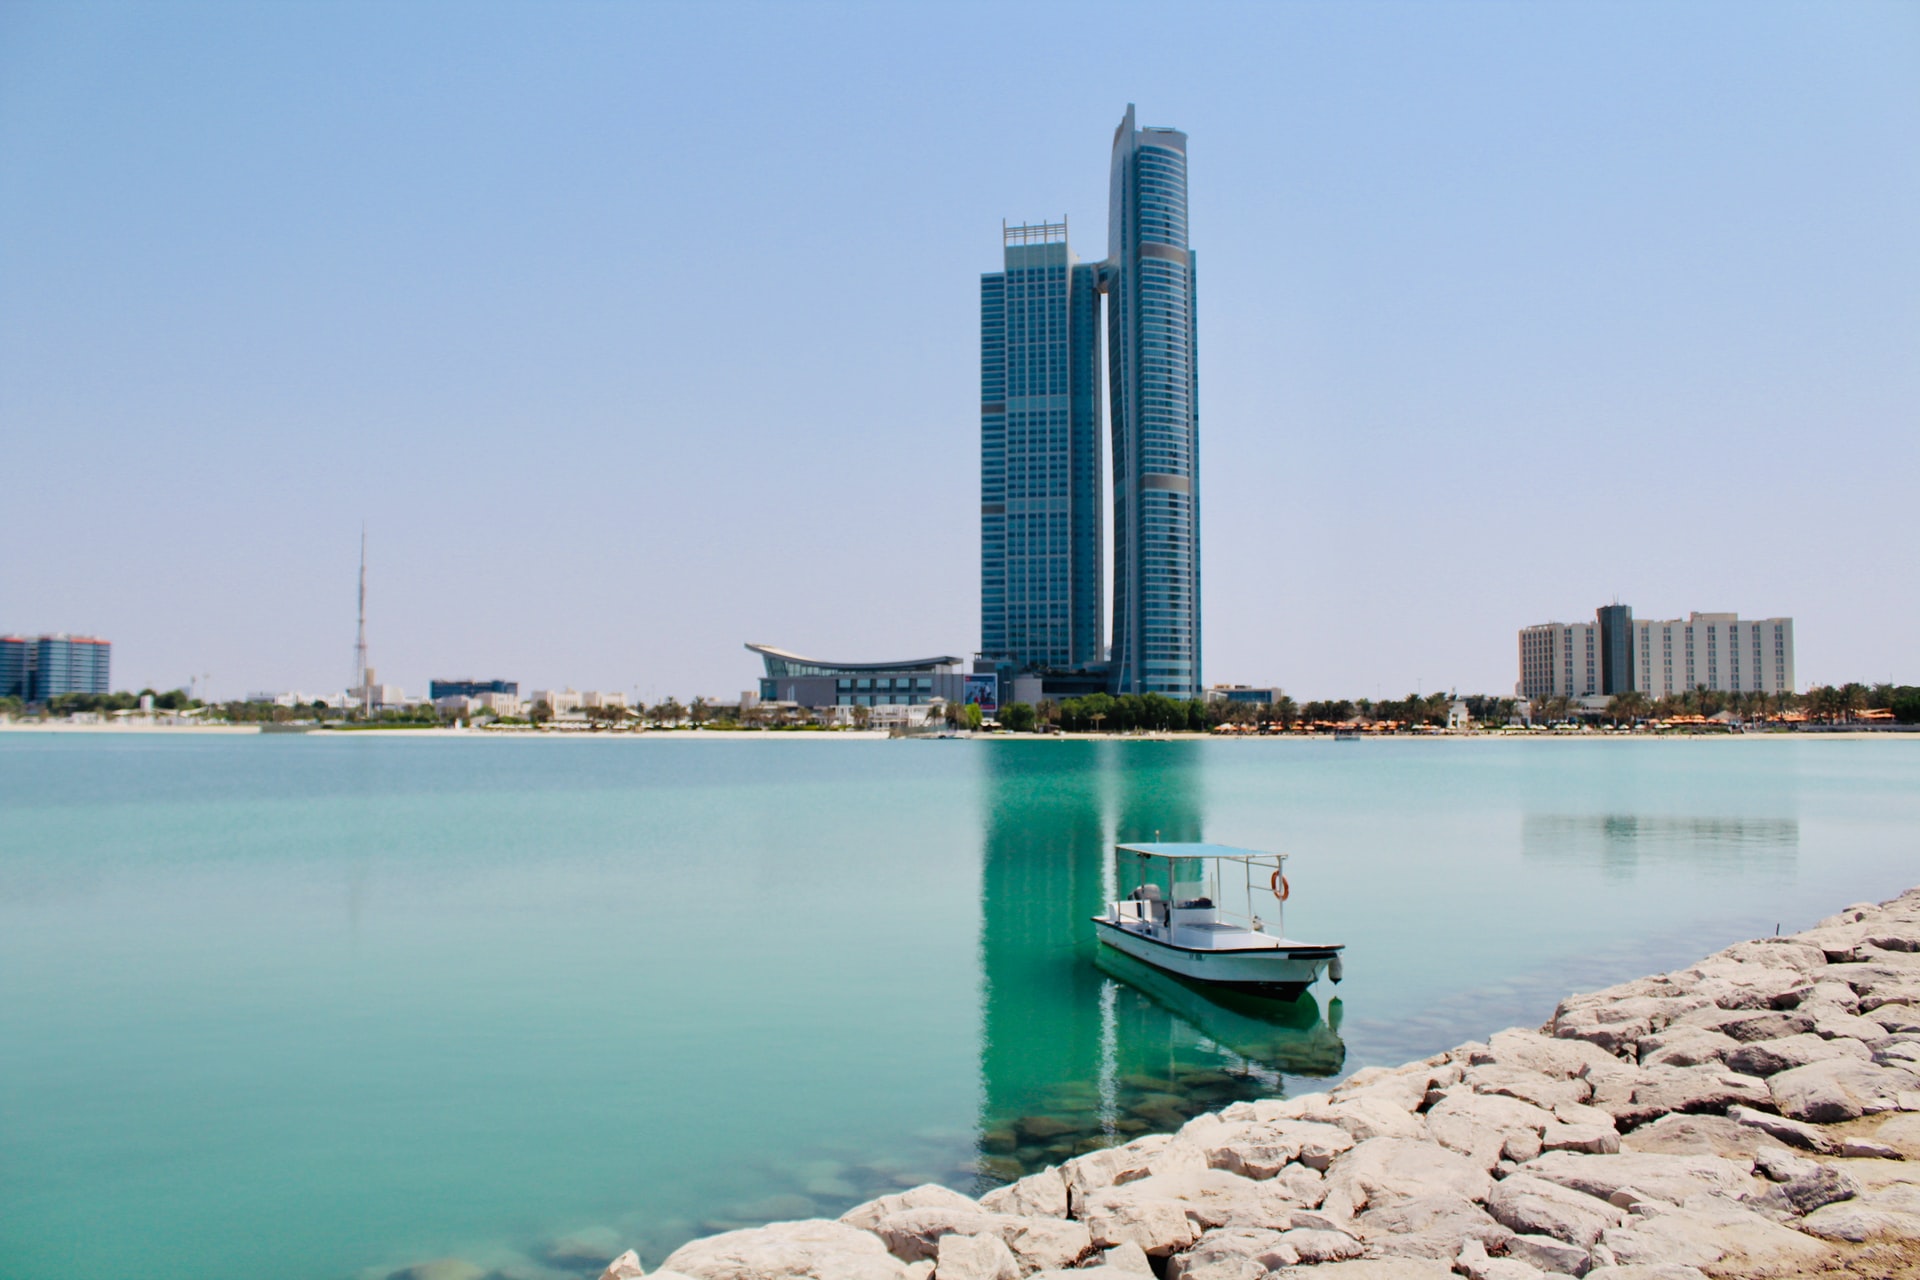 Corniche beach, Abu Dhabi